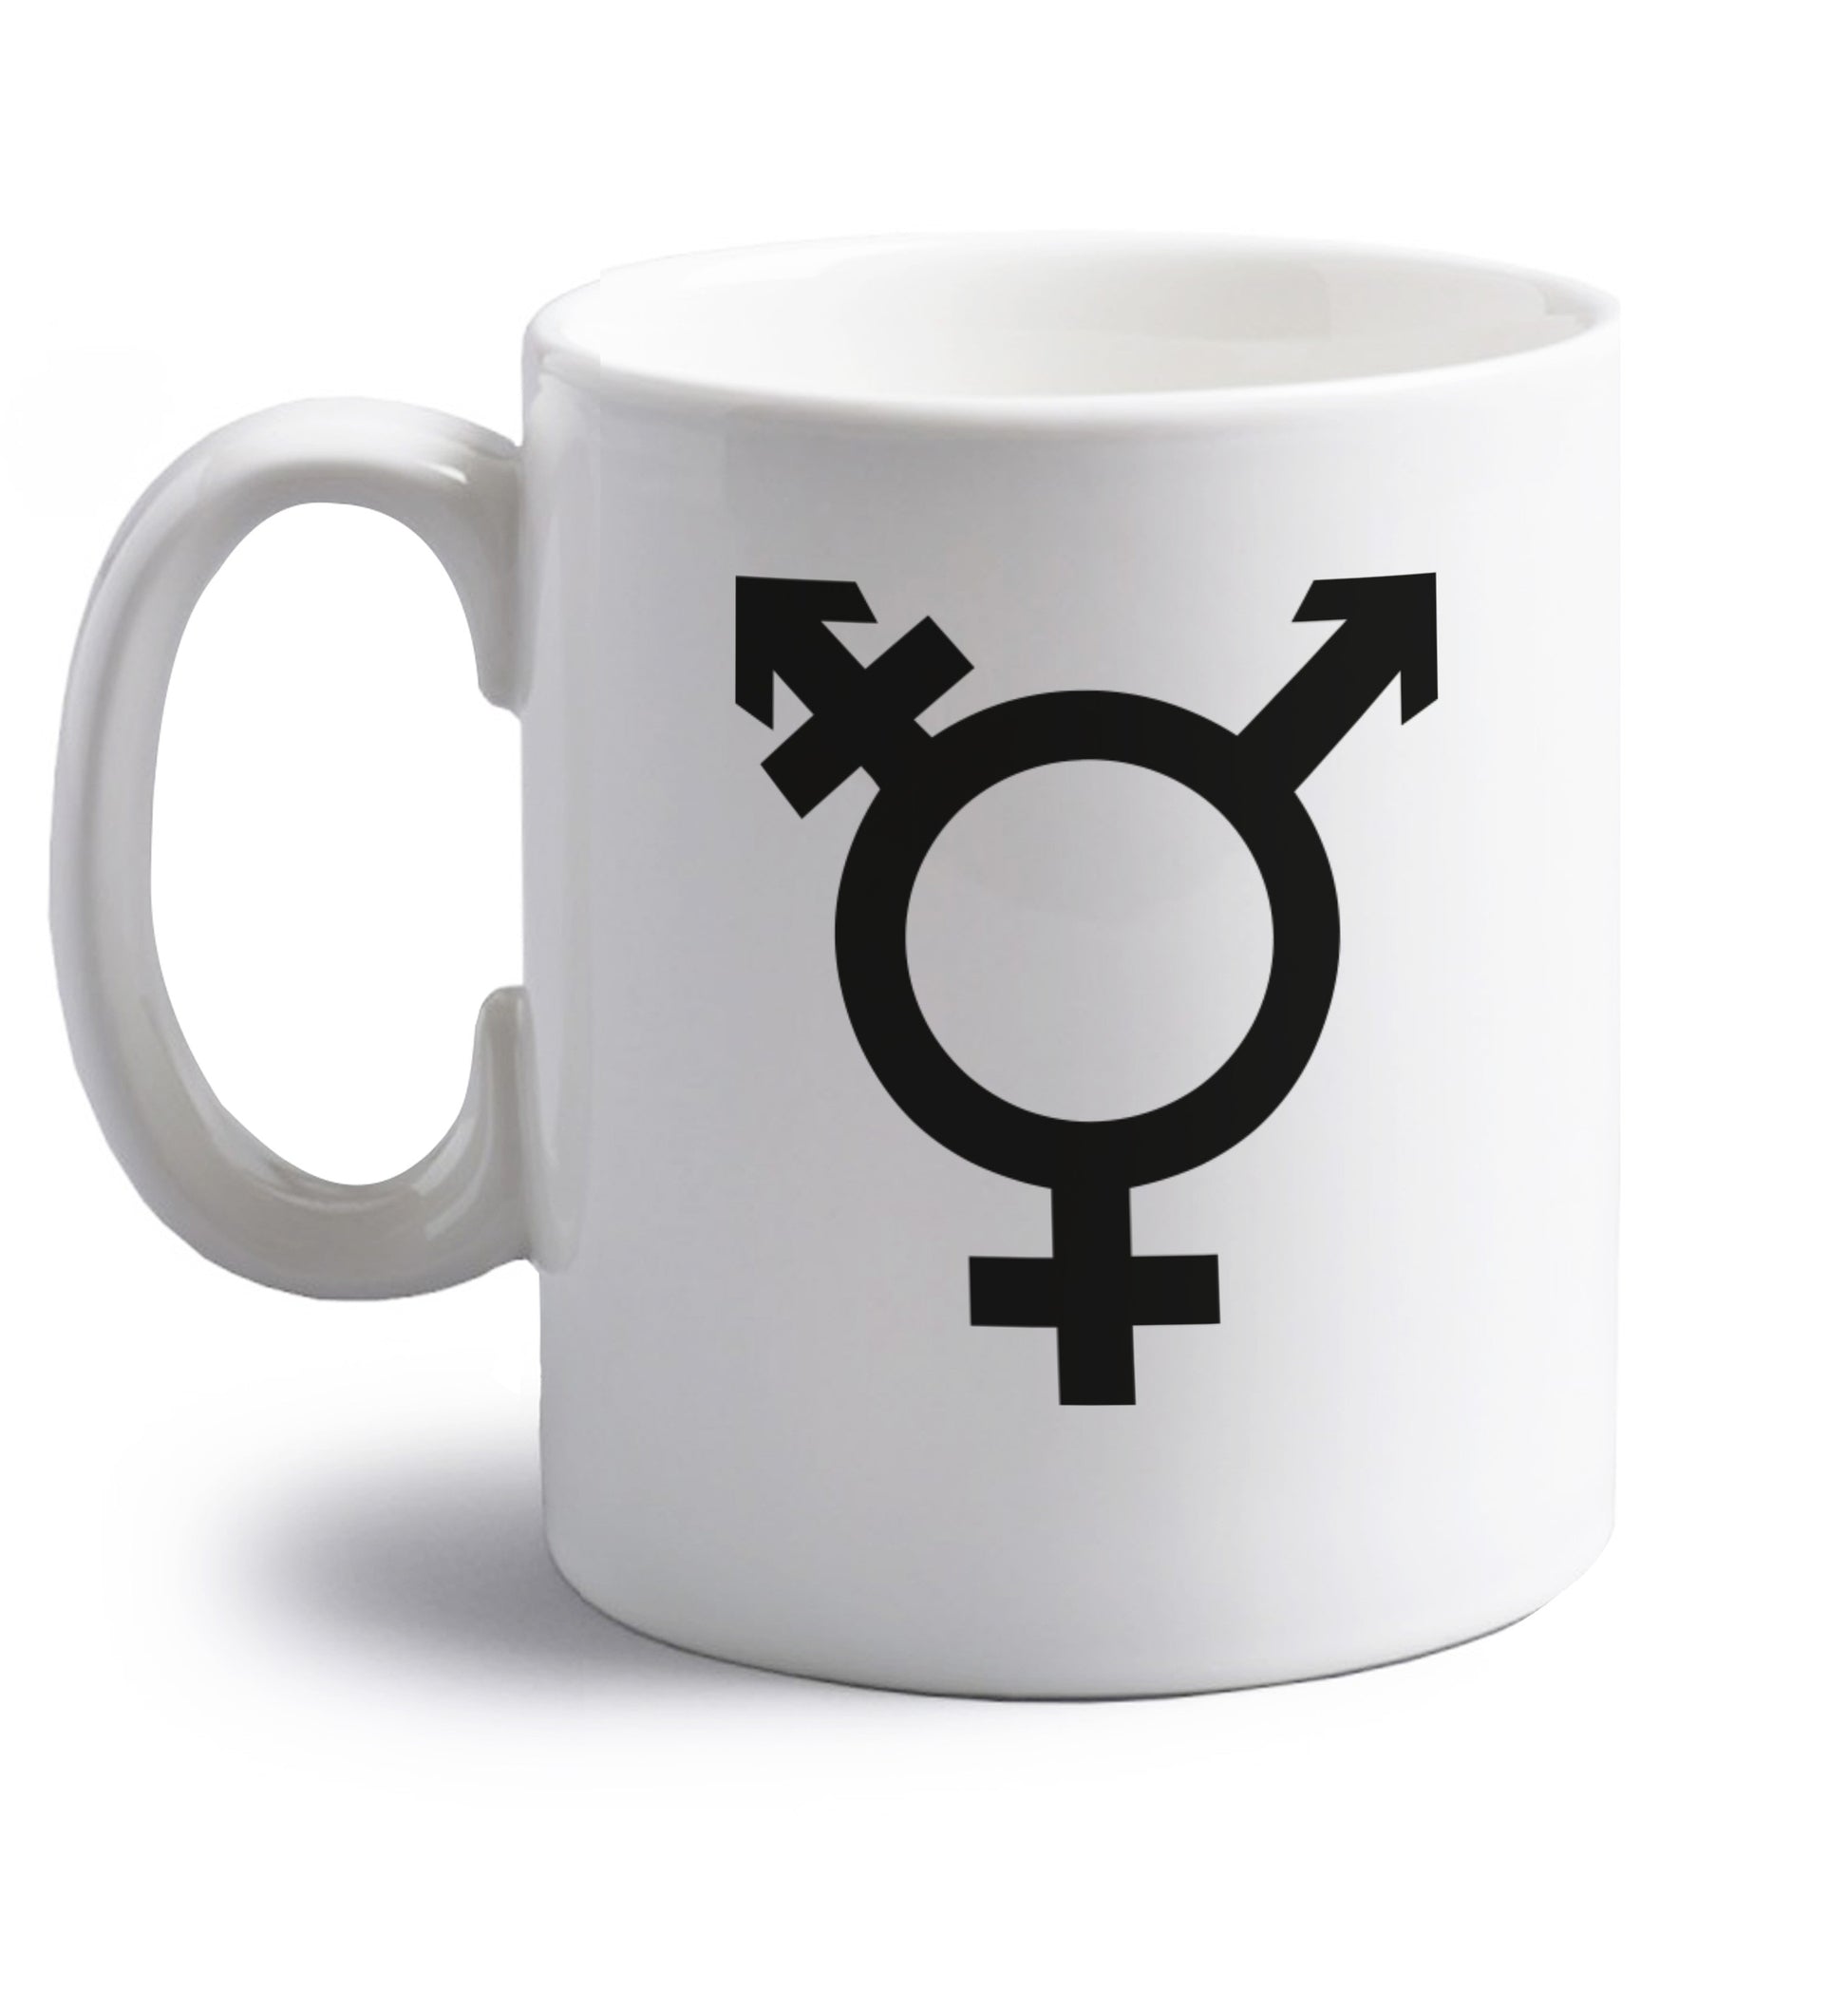 Gender neutral symbol large right handed white ceramic mug 